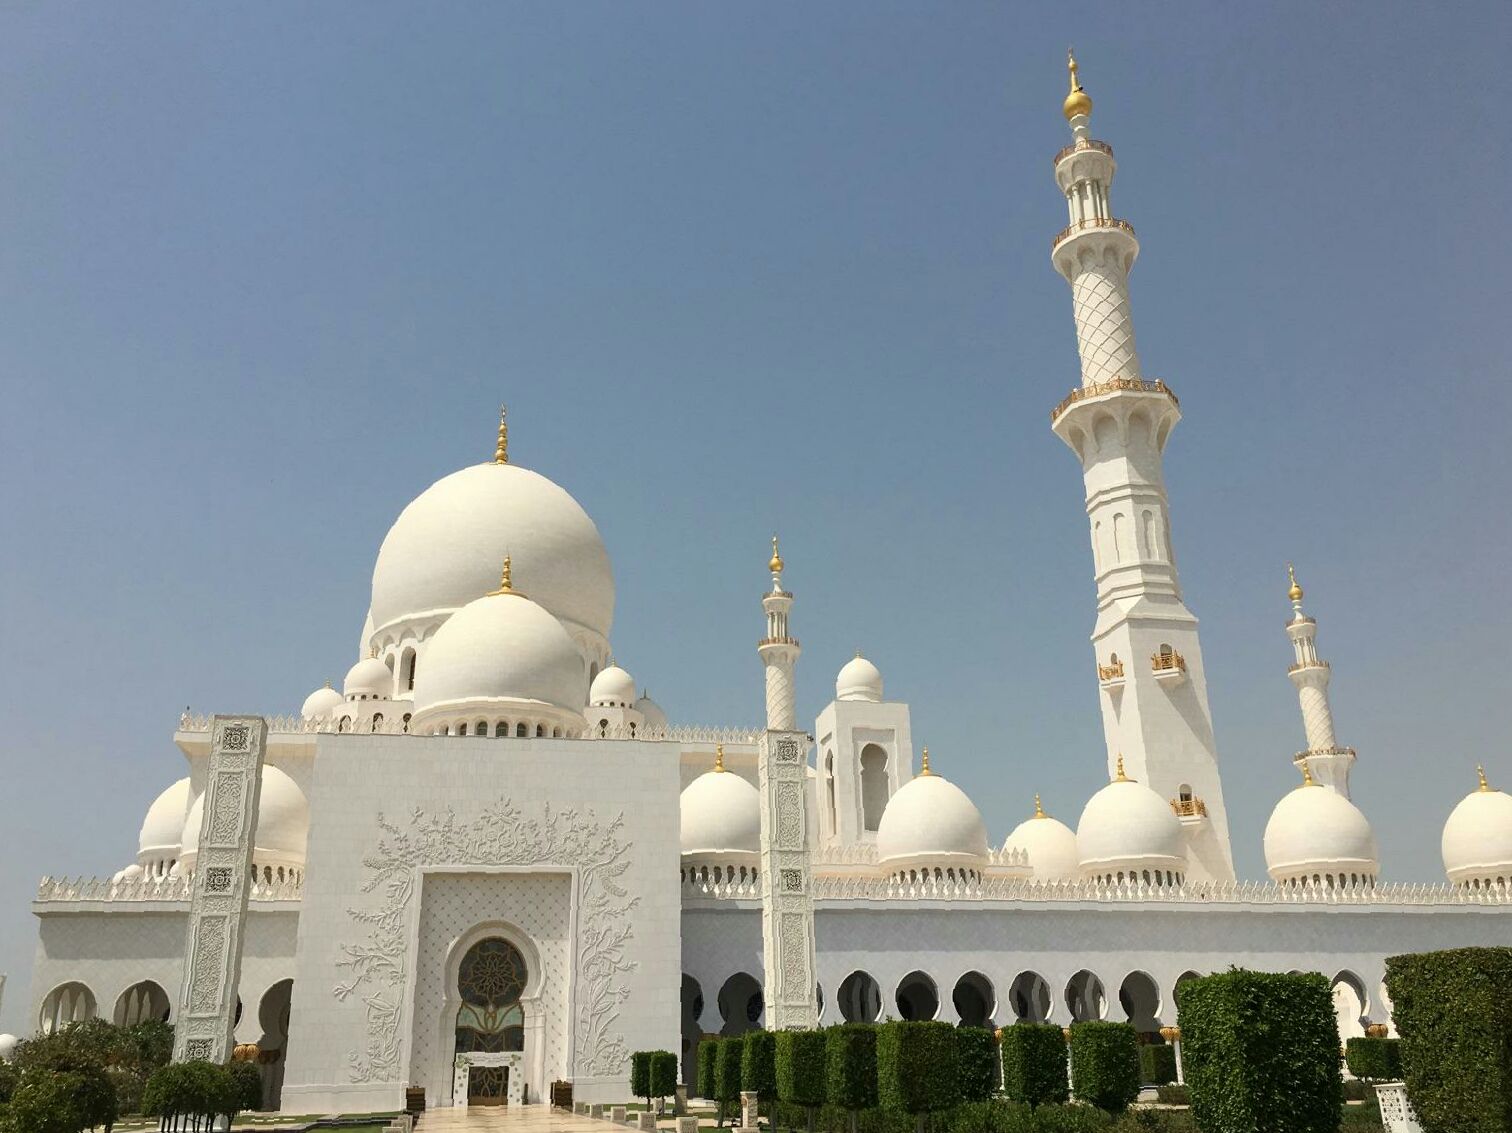 Sheikh Zayed Grand Mosque - Abu Dhabi, United Arab Emirates